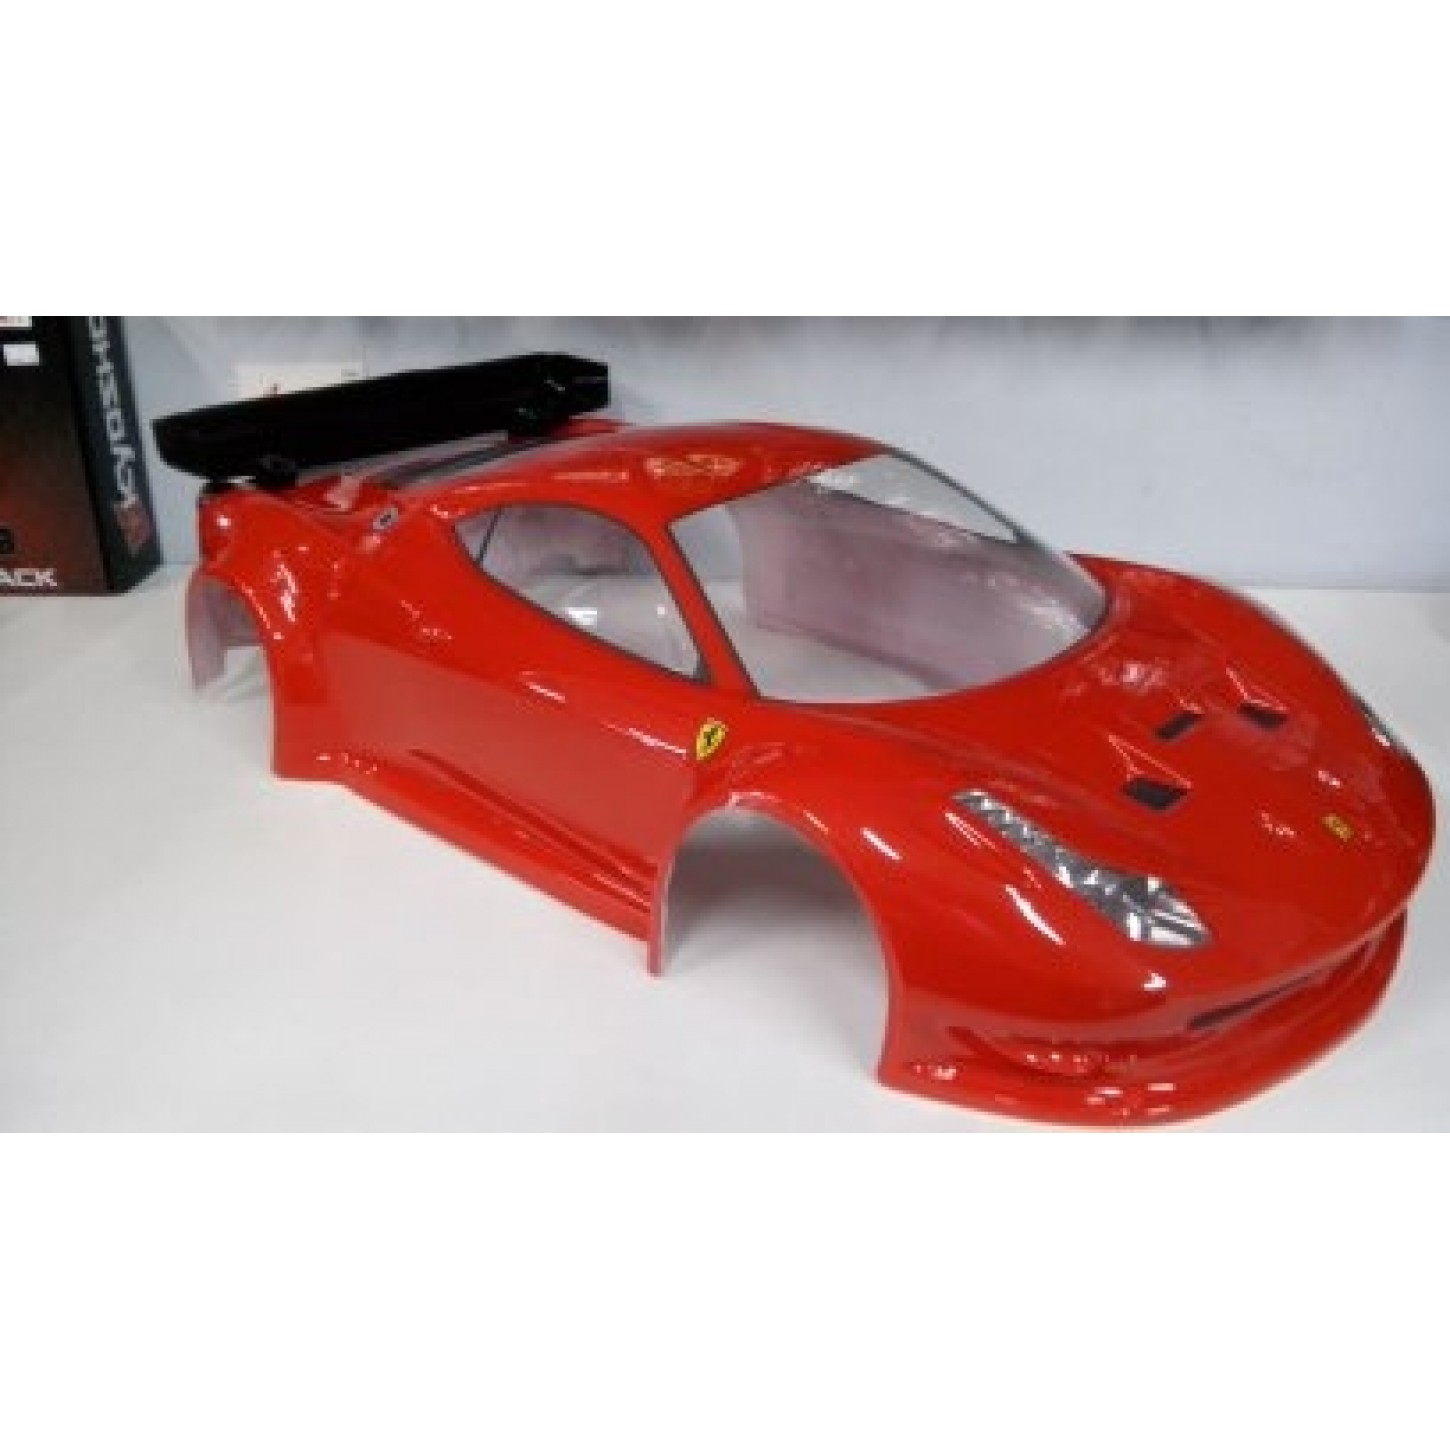 Bolha Ferrari F430 1 8